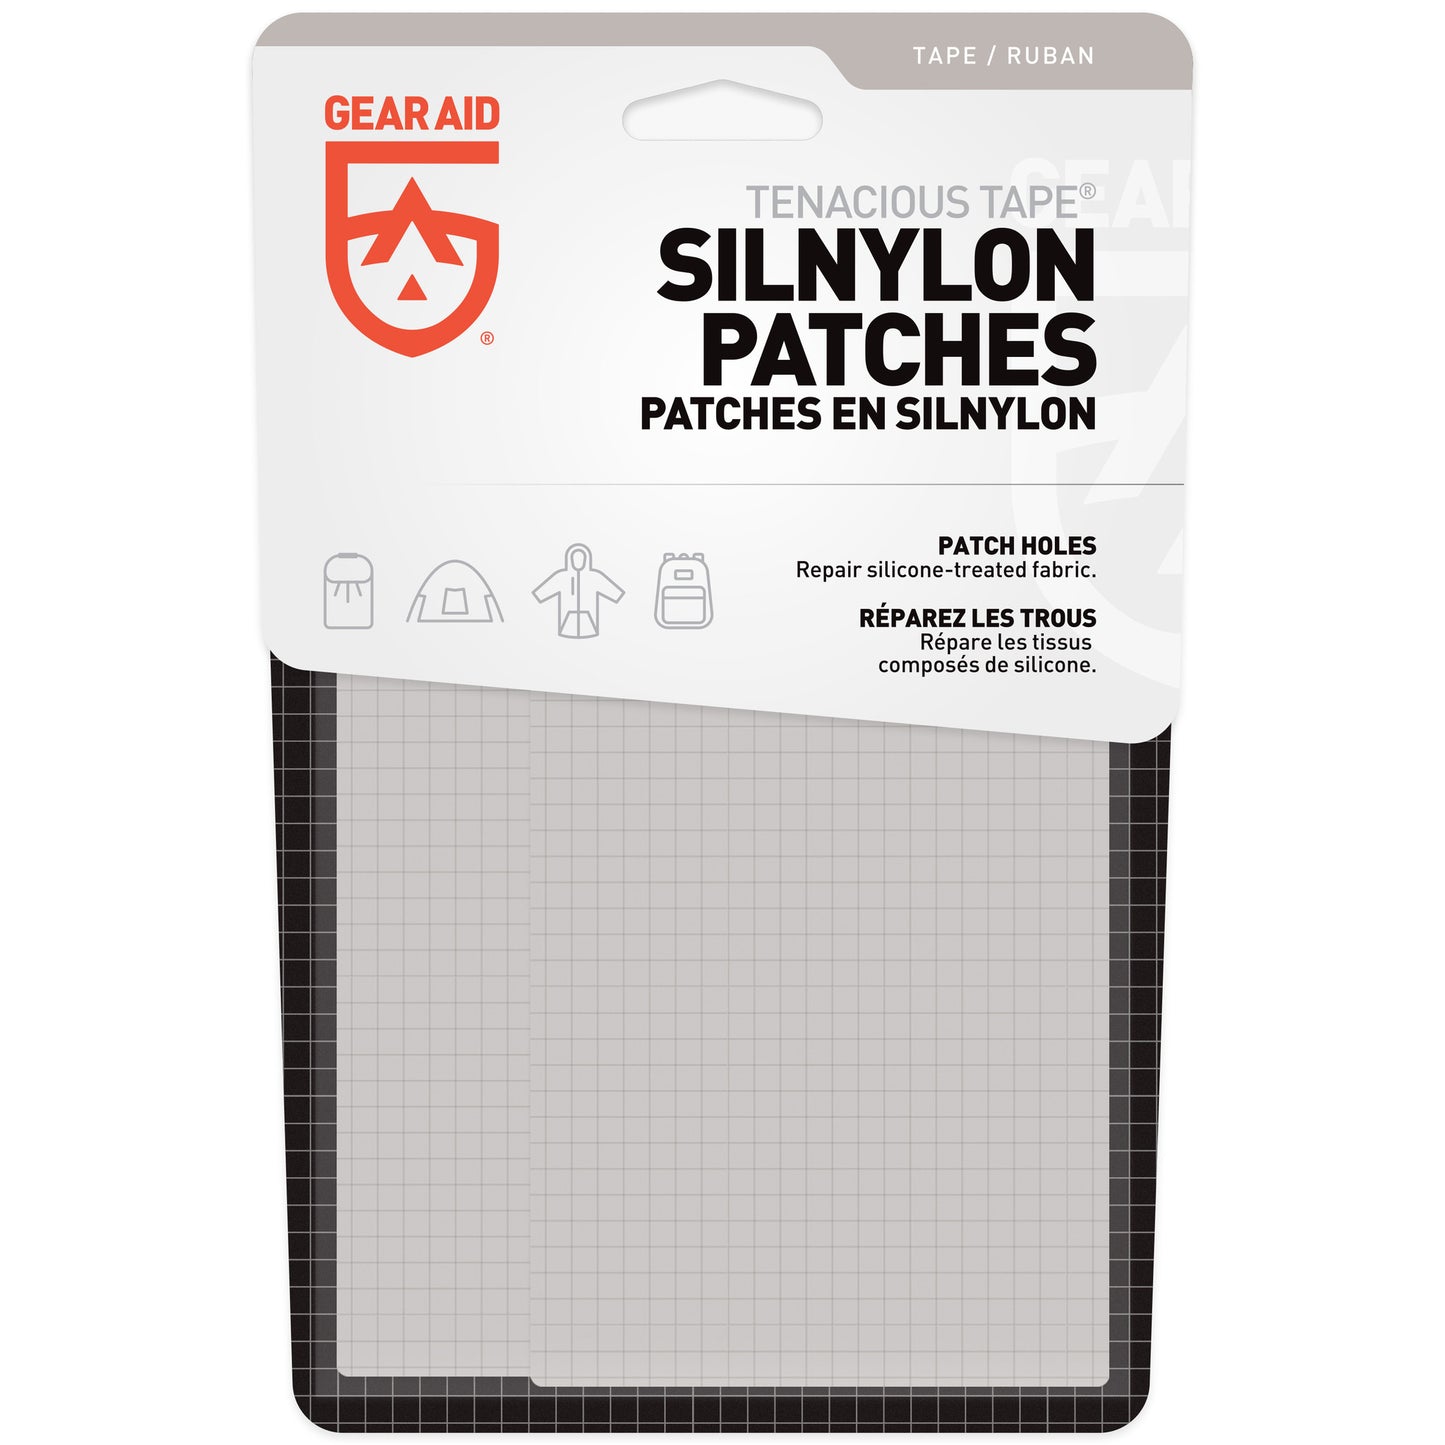 Gear Aid Tenacious Tape Silnylon Patches